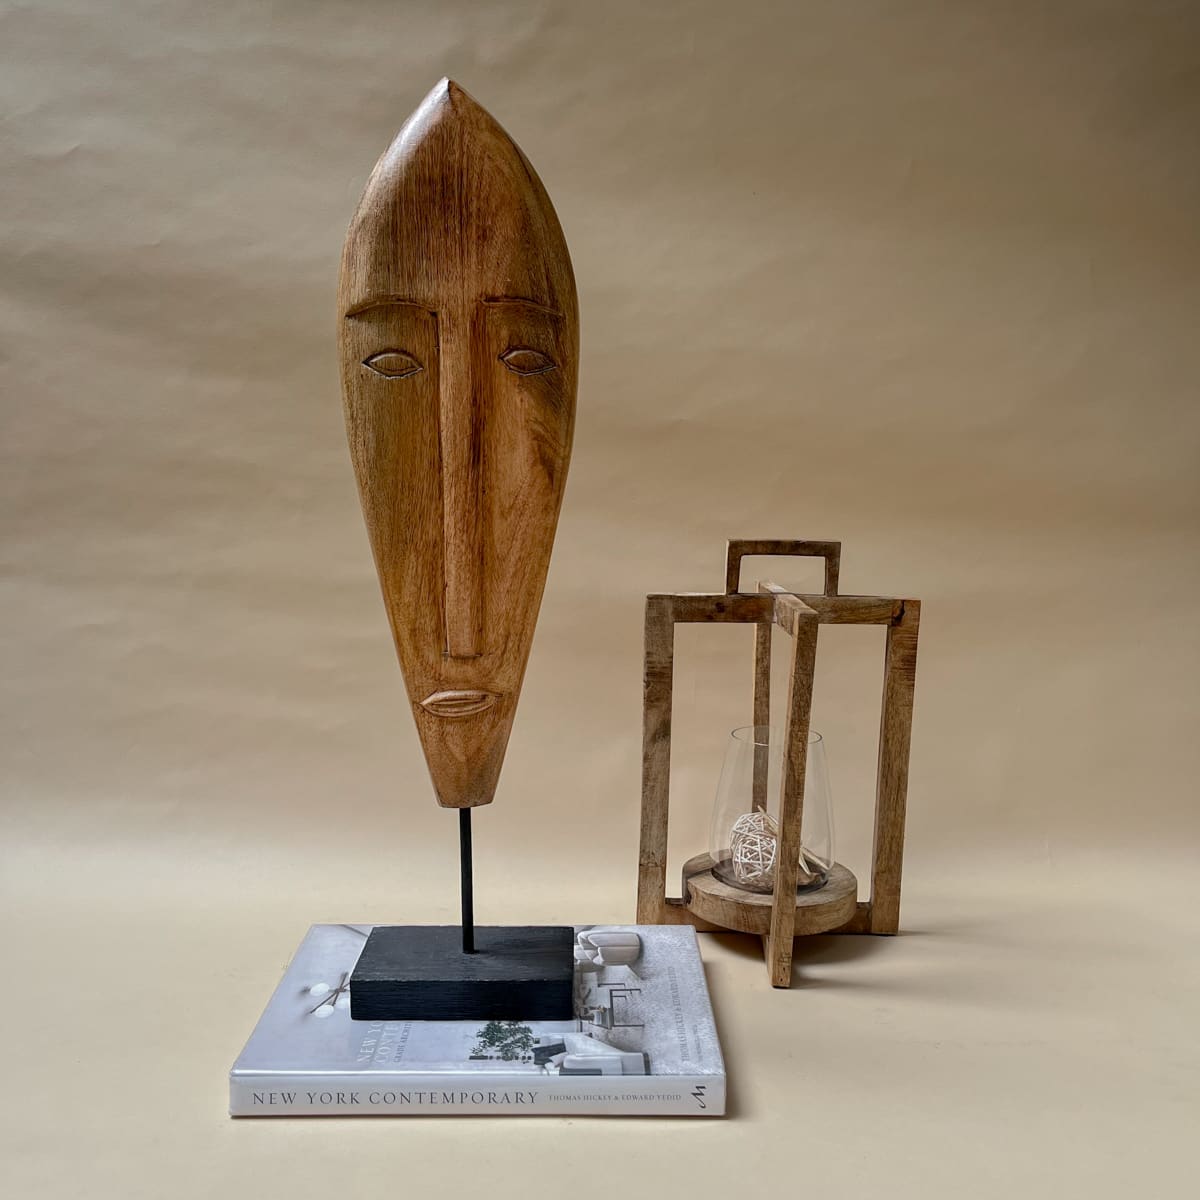 Mikom Wooden Face Sculpture (Large) - Home Artisan